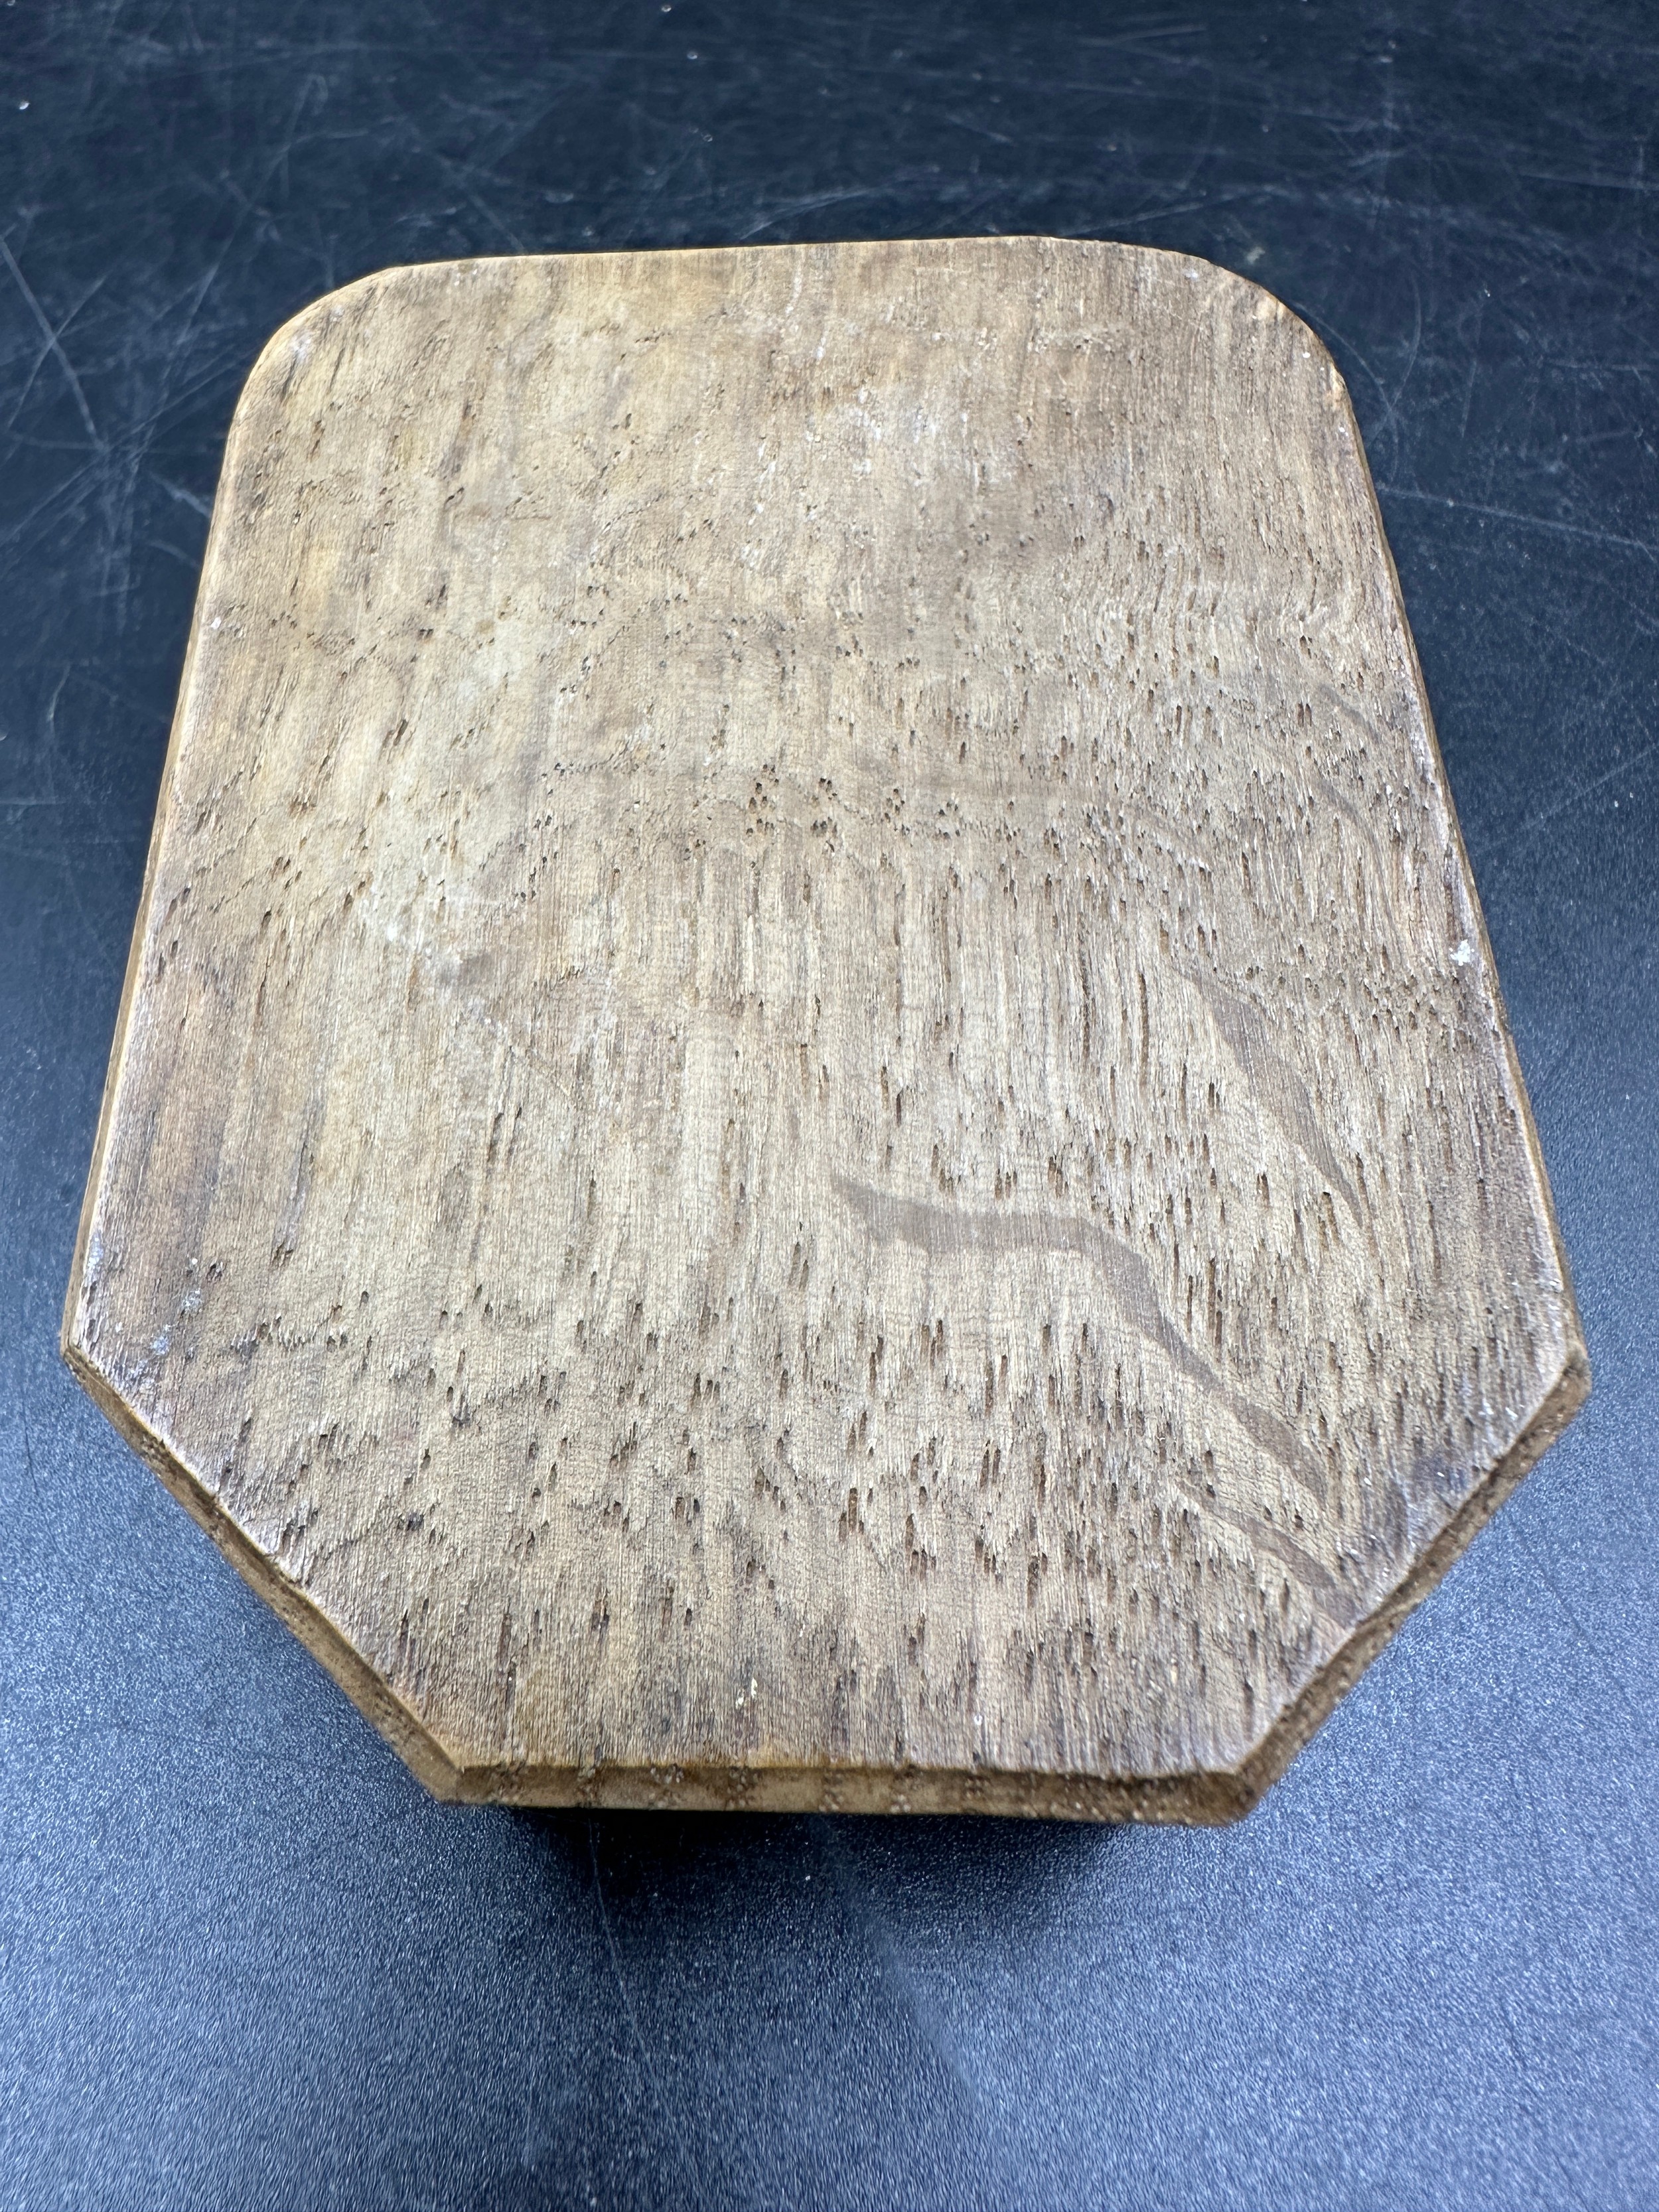 Robert Thompson 'Mouseman' Oak ashtray 10cm x 7.5cm. - Image 3 of 3